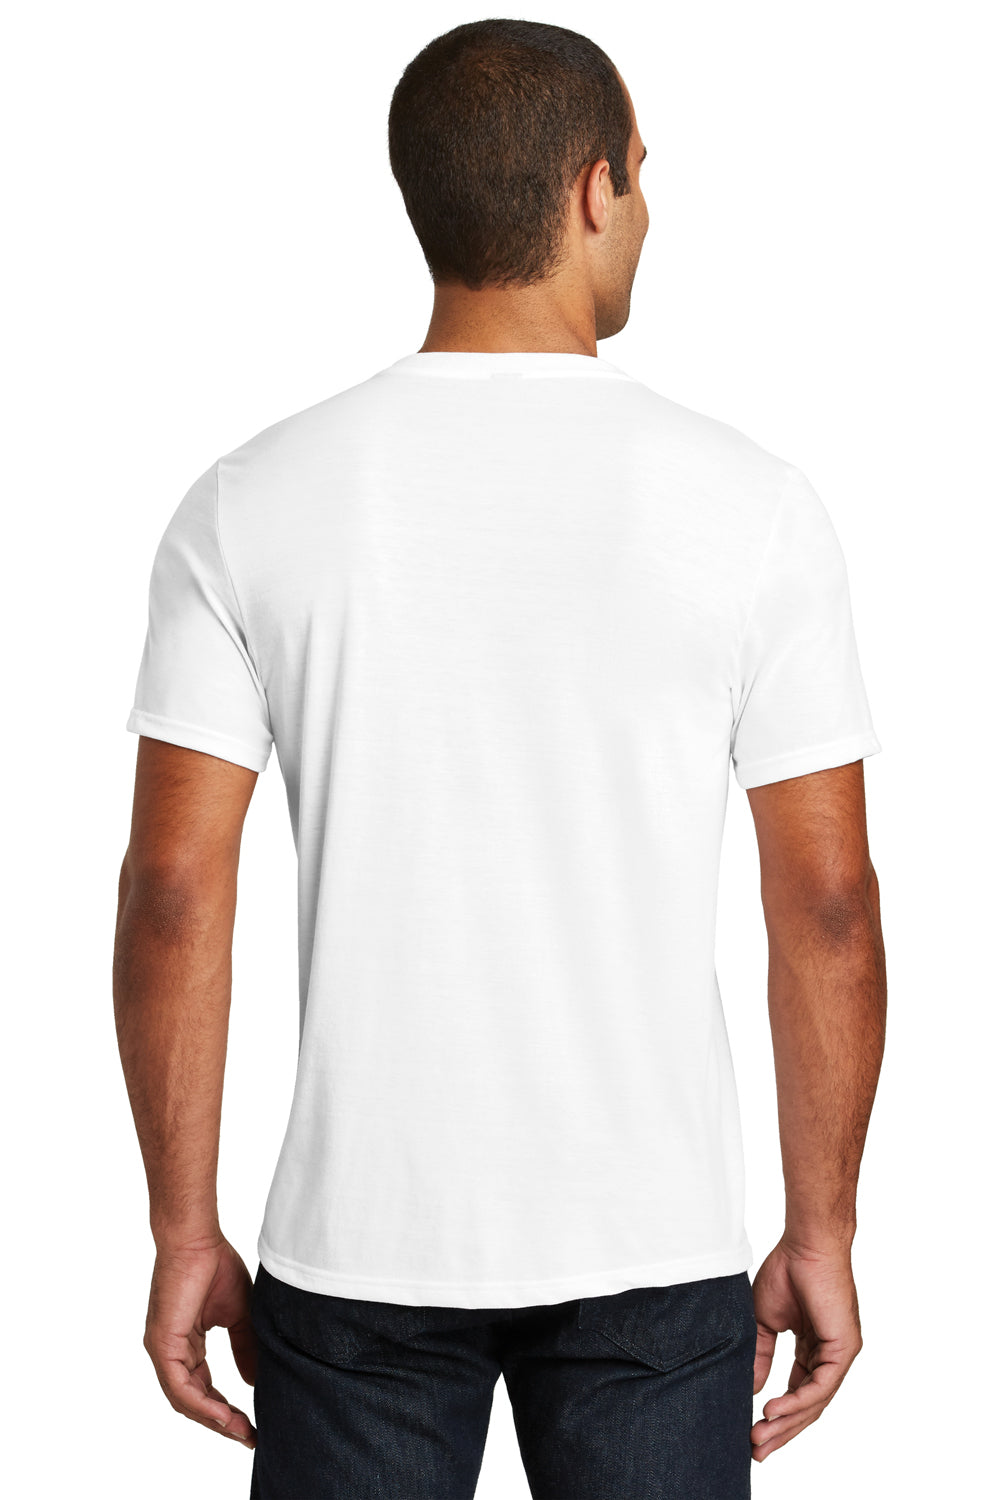 District DT1350 Mens Perfect Tri Short Sleeve V-Neck T-Shirt White Back